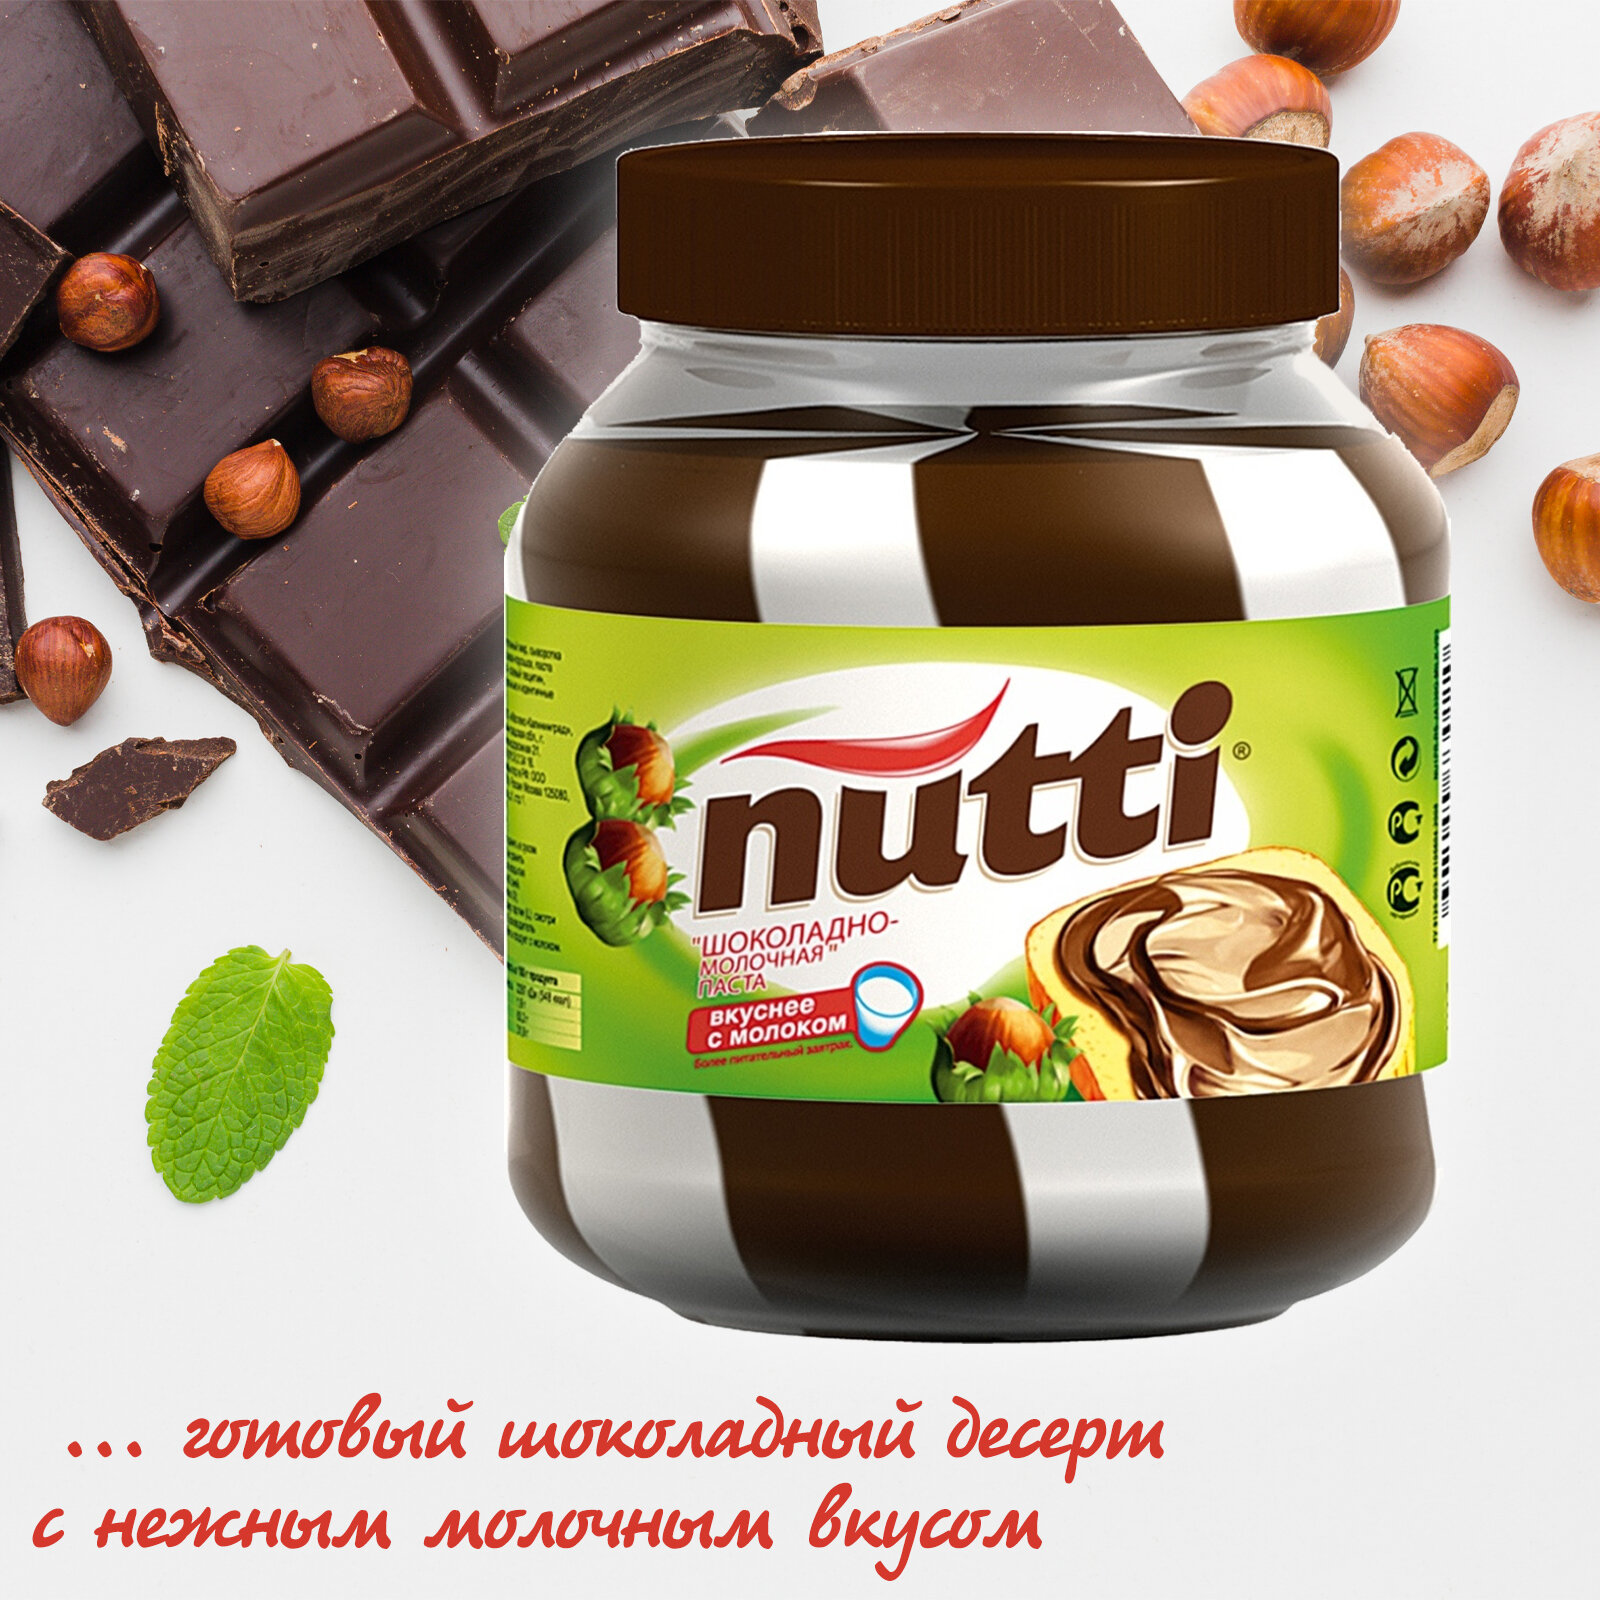 Паста ореховая шоколадно-молочная Nutti, 330г.